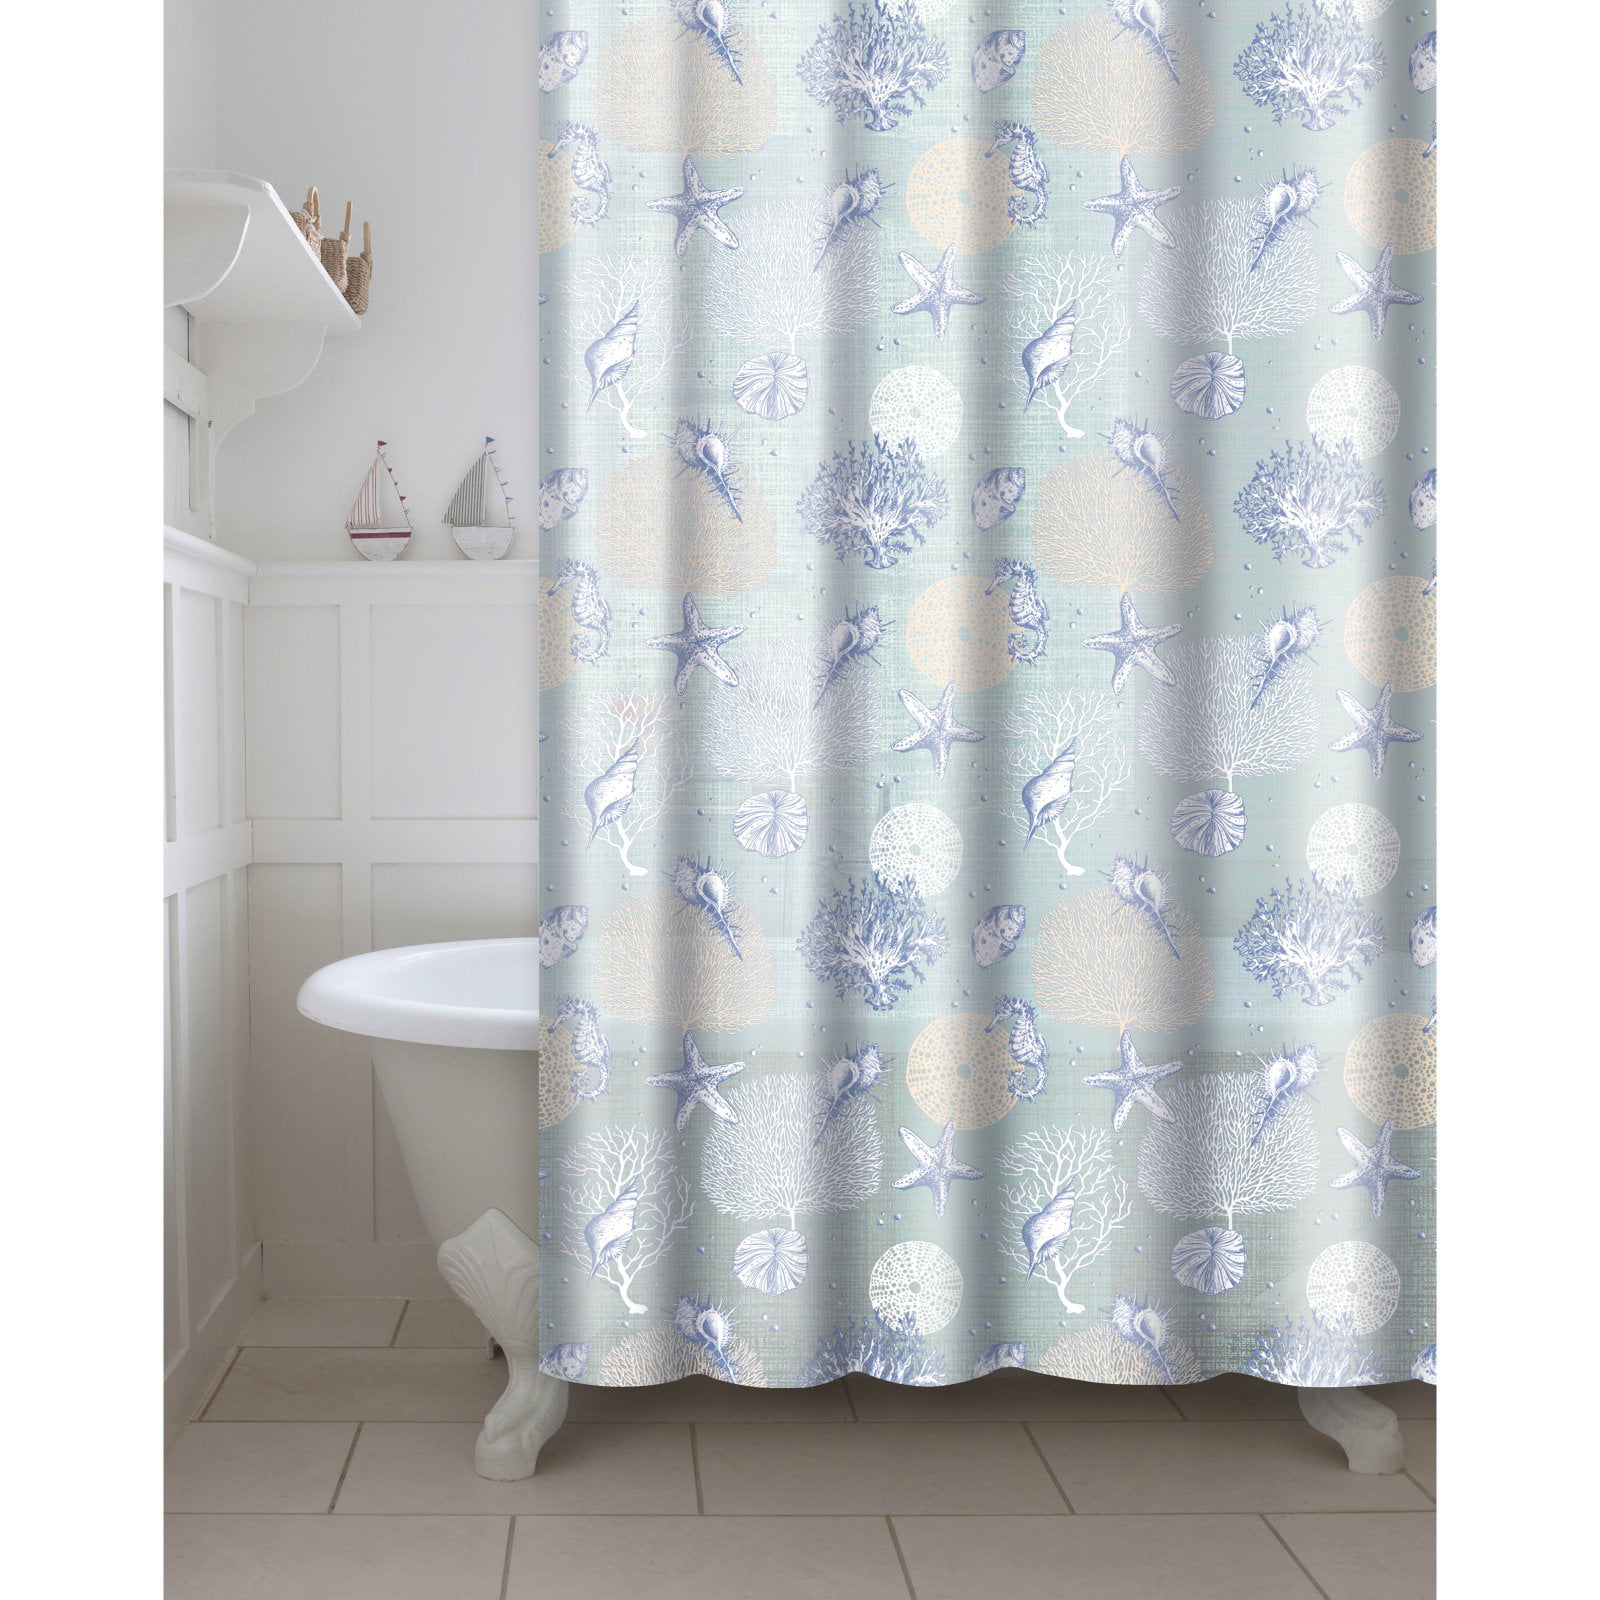 Printed C Peva Eva Shower Curtain, Gender Neutral Shower Curtains